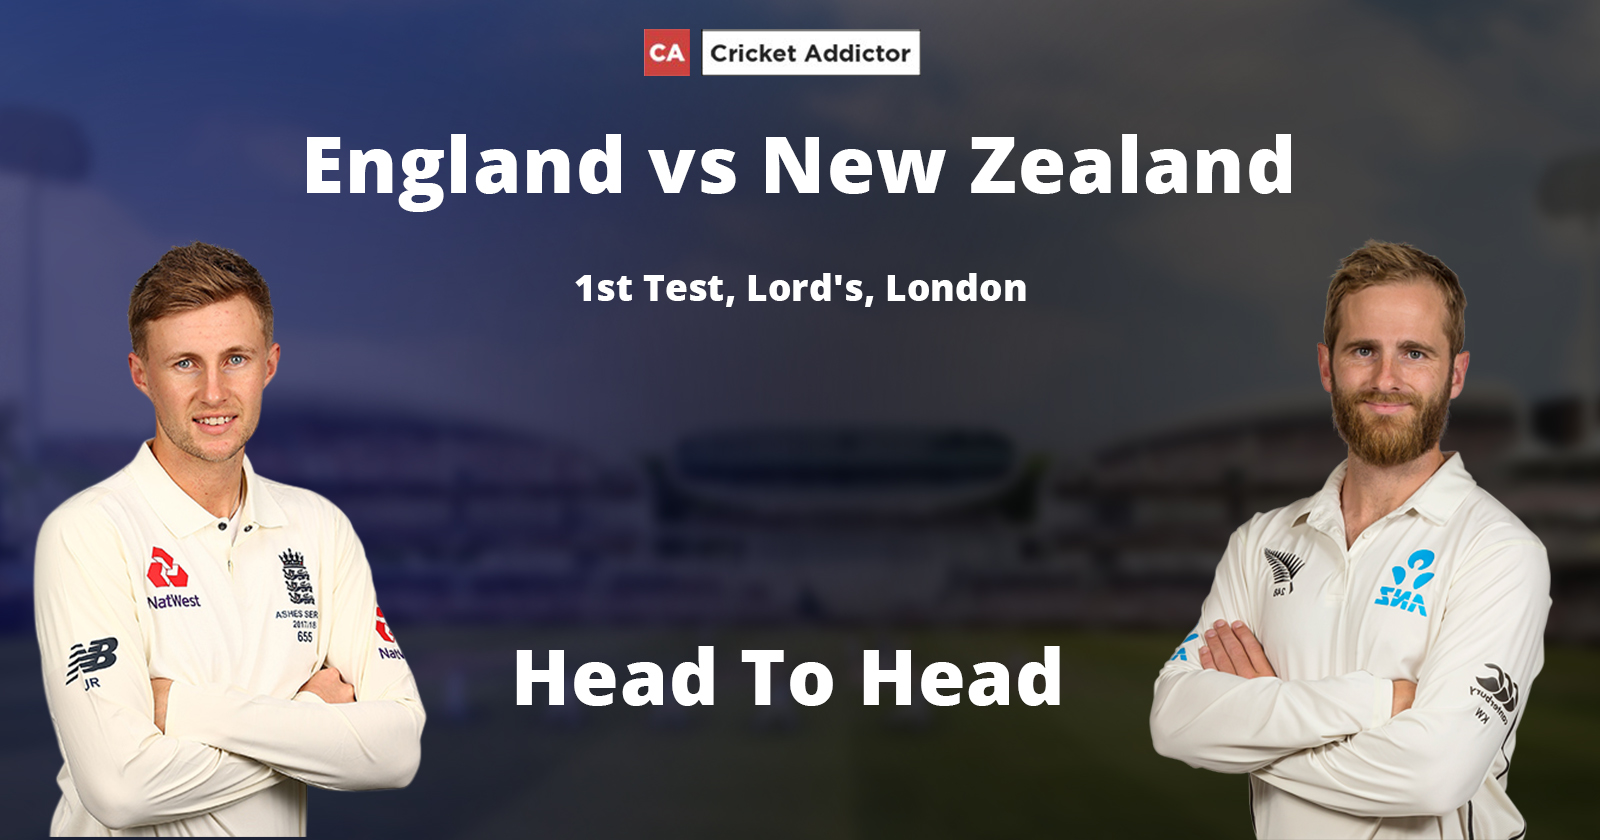 England vs New Zealand 2021, 1st Test: Head-To-Head Records